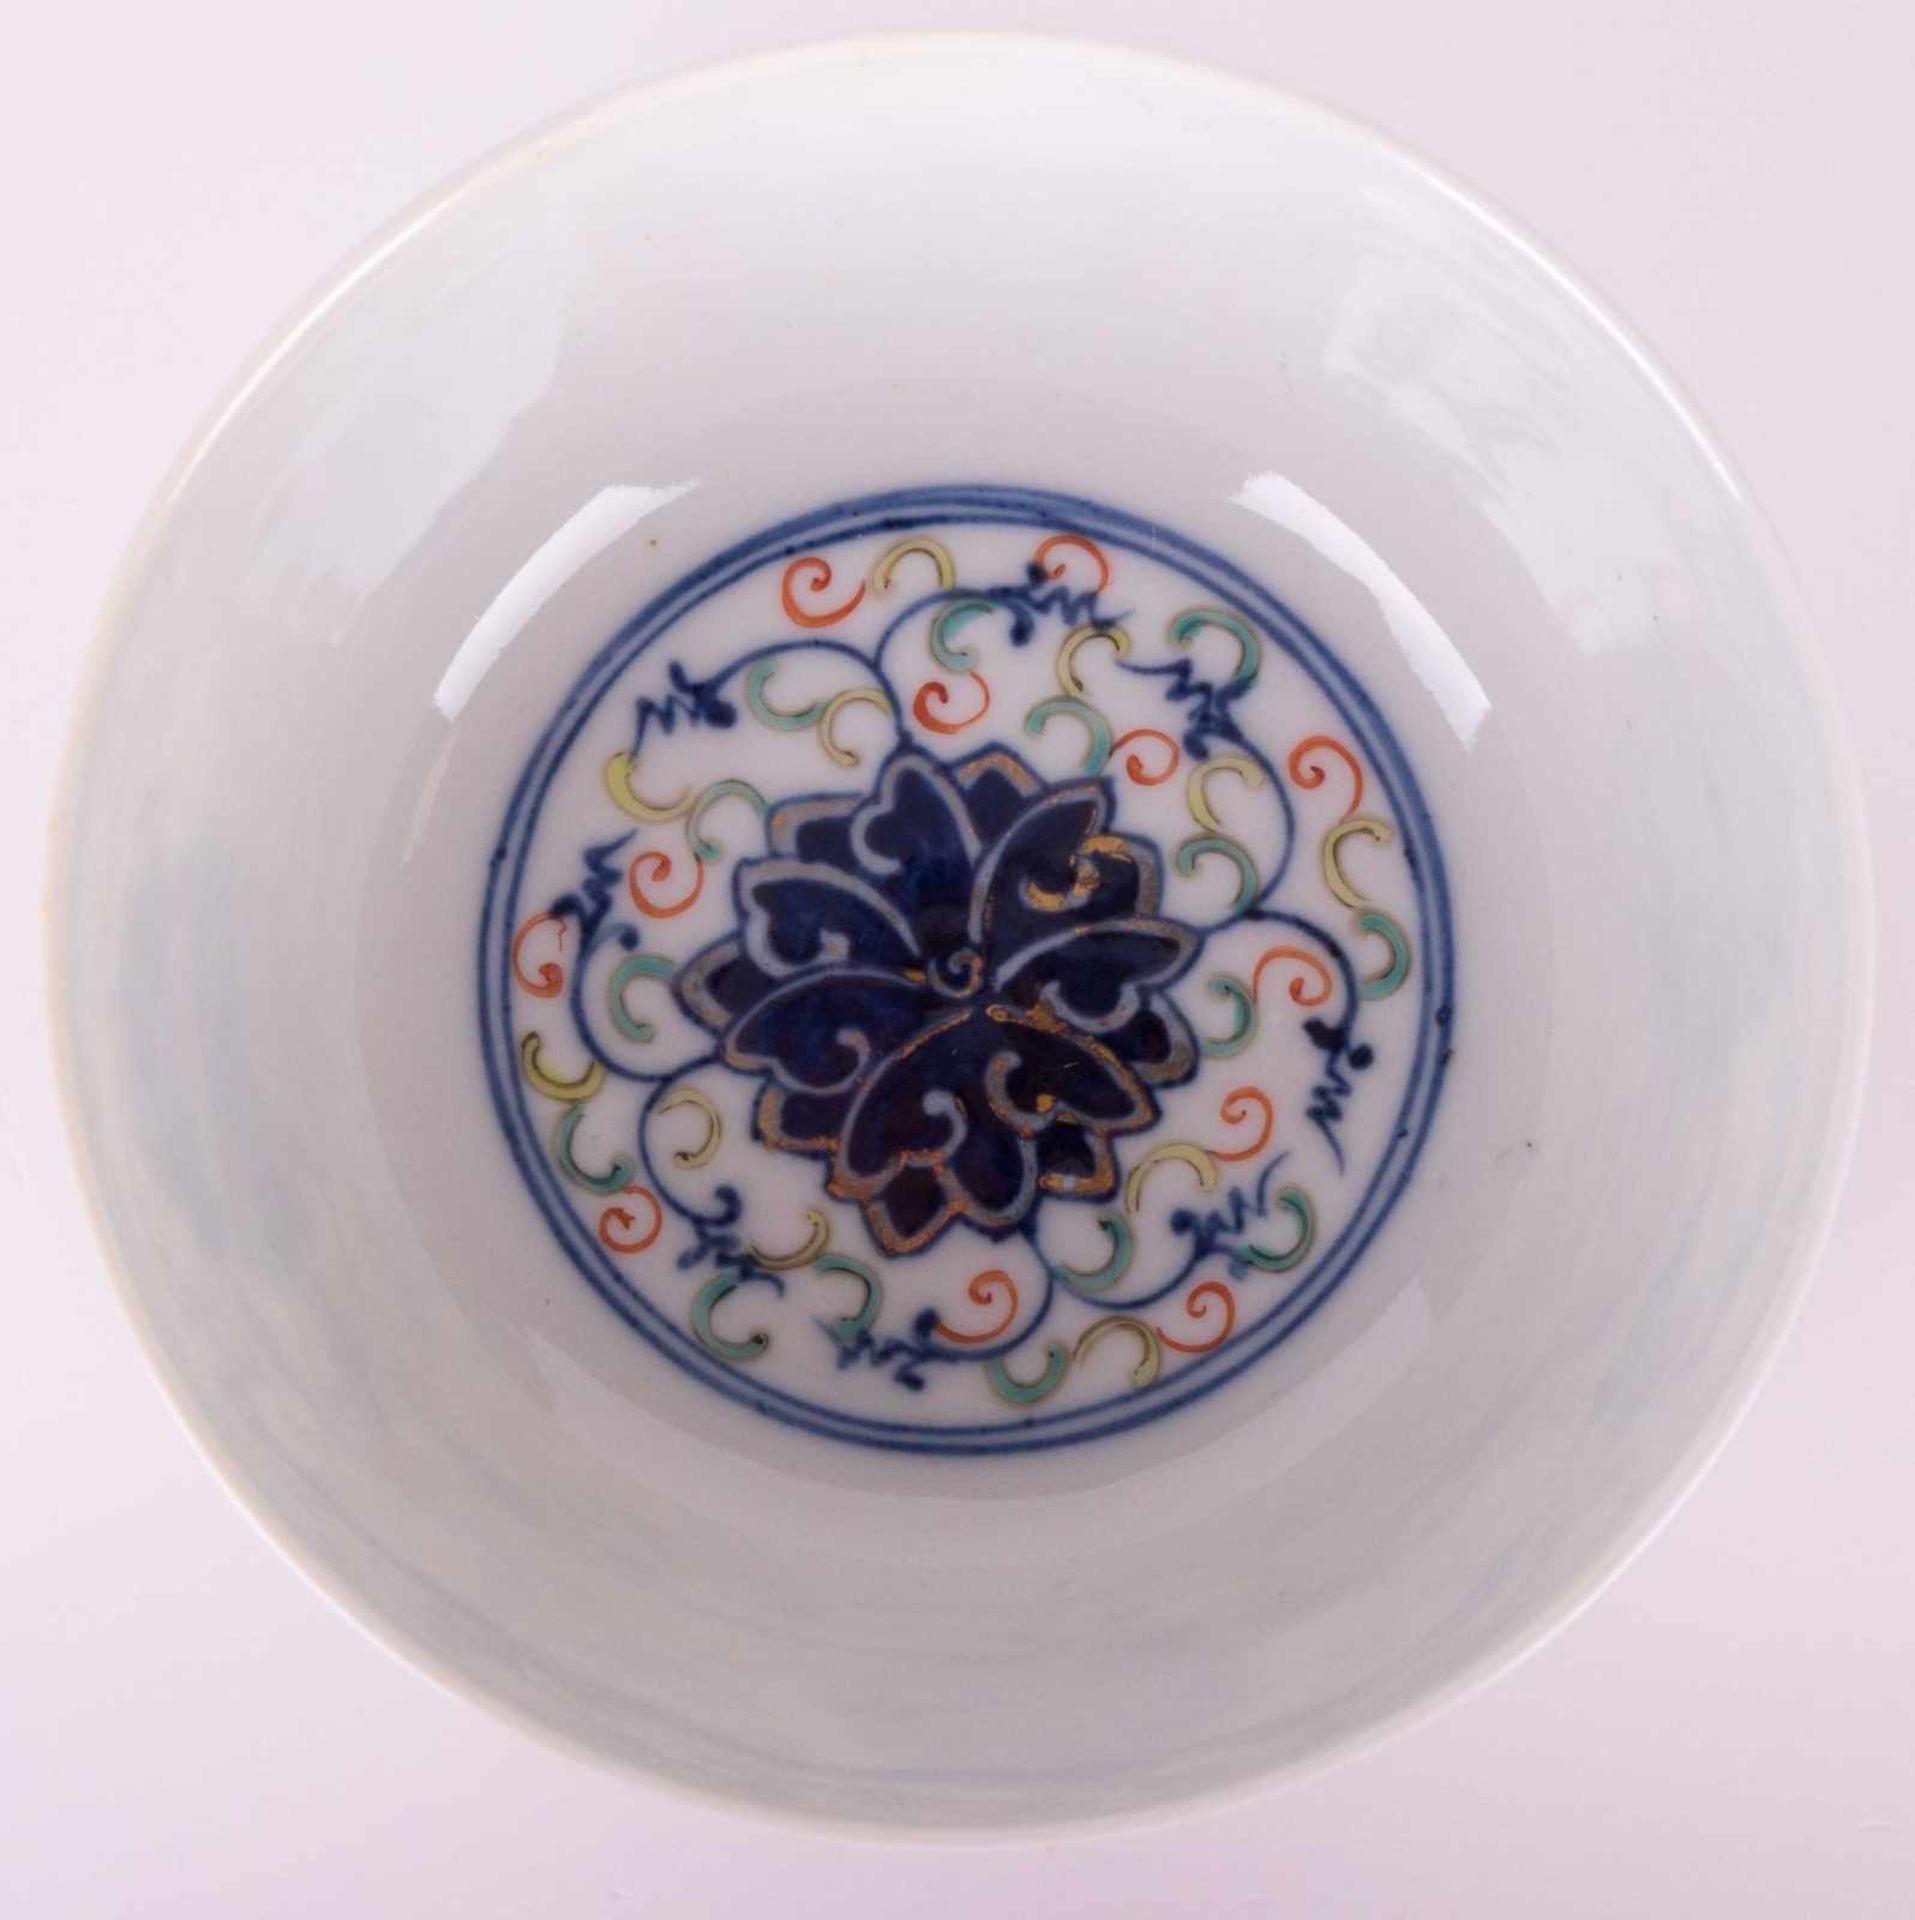 Porzellan Schale China 19. Jhd./20. Jhd. / Porcelain bowl, China 19th/20th century Polychrom - Image 3 of 5